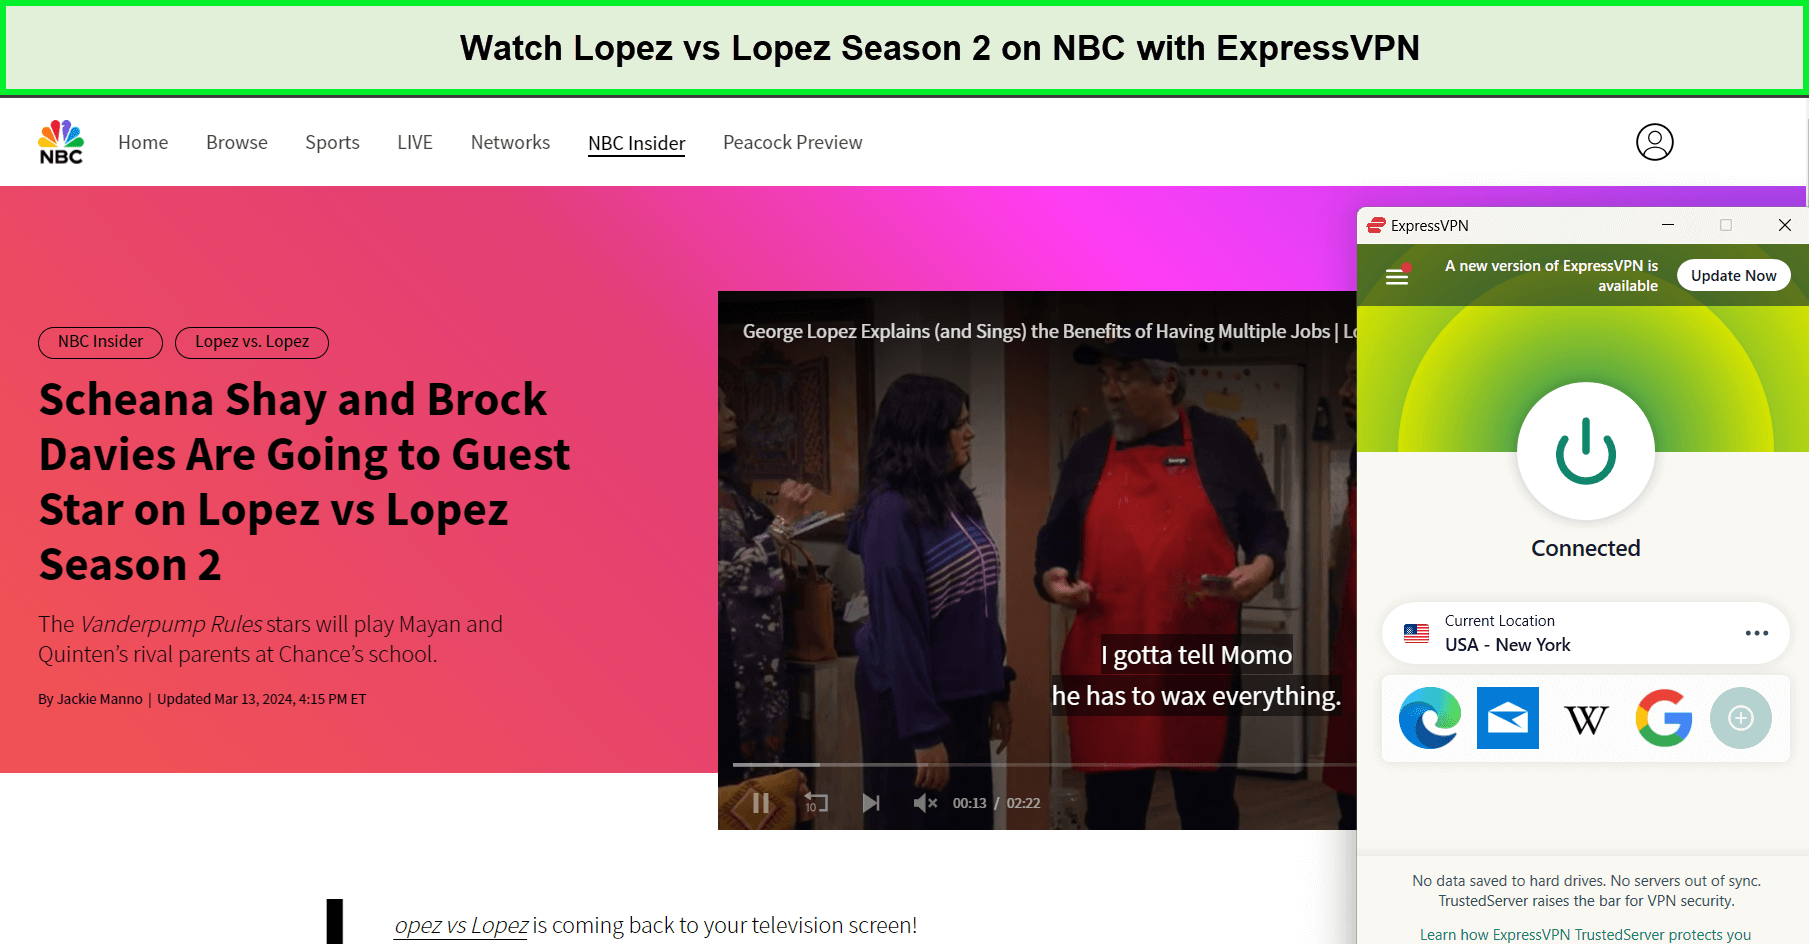 Watch-Lopez-vs-Lopez-Season-2-in-South Korea-on-NBC